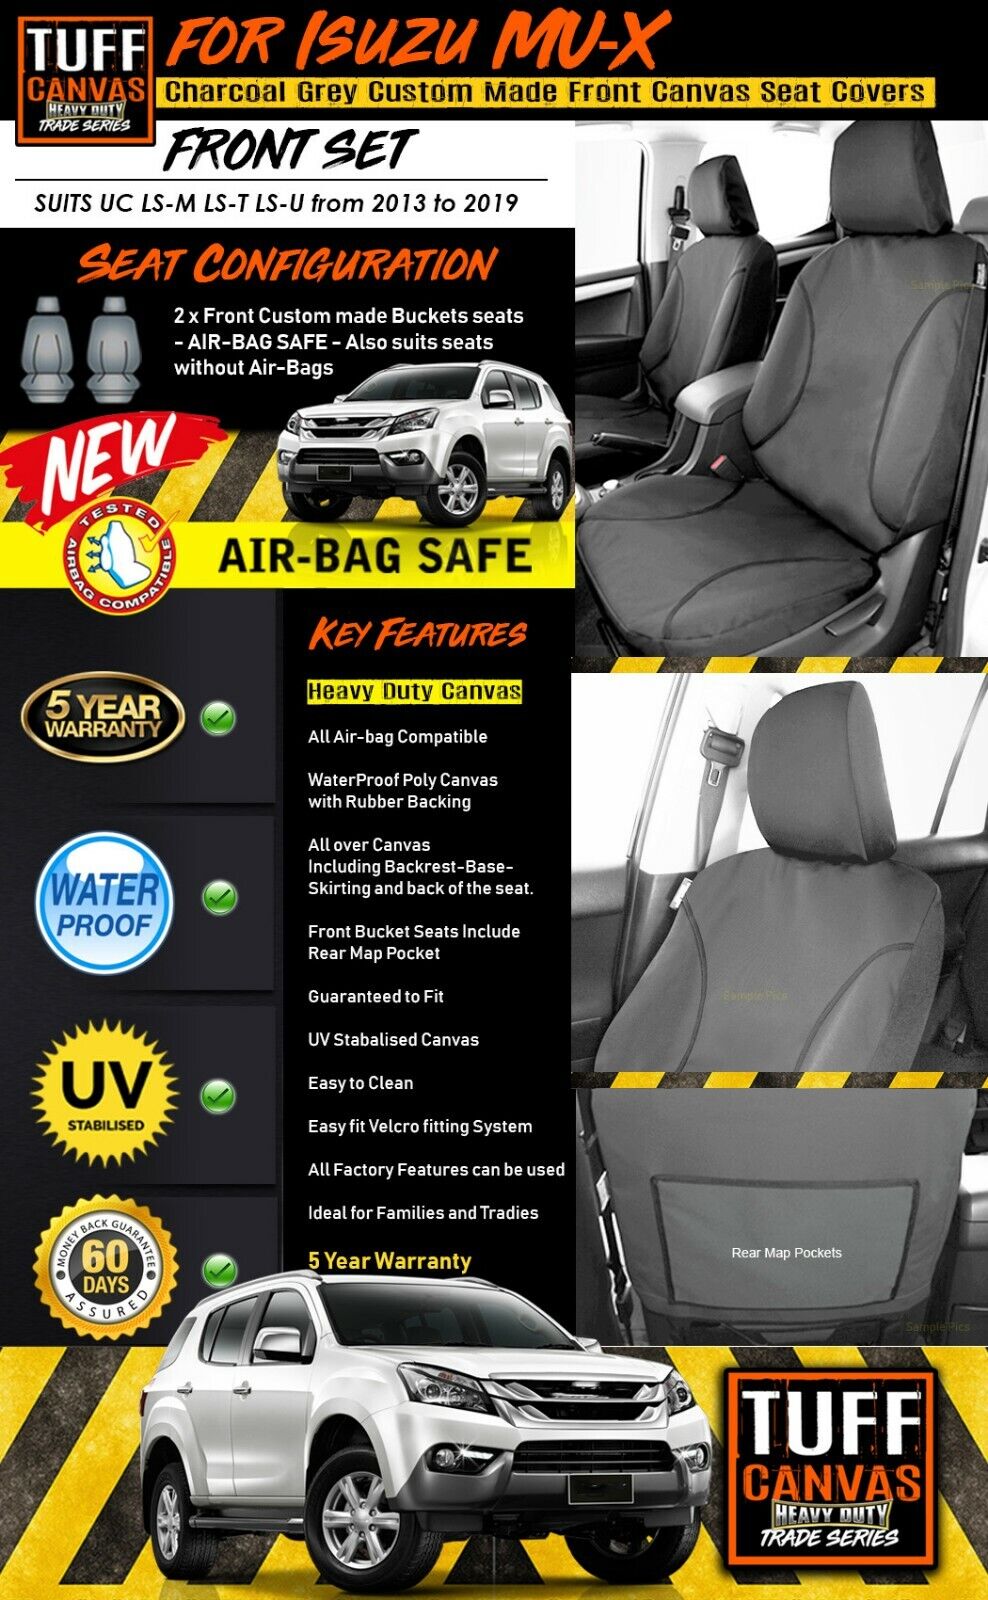 TUFF HD TRADE Canvas Seat Covers Front For Isuzu MU-X LS-M LS-T LS-U 2013-2019 Charcoal